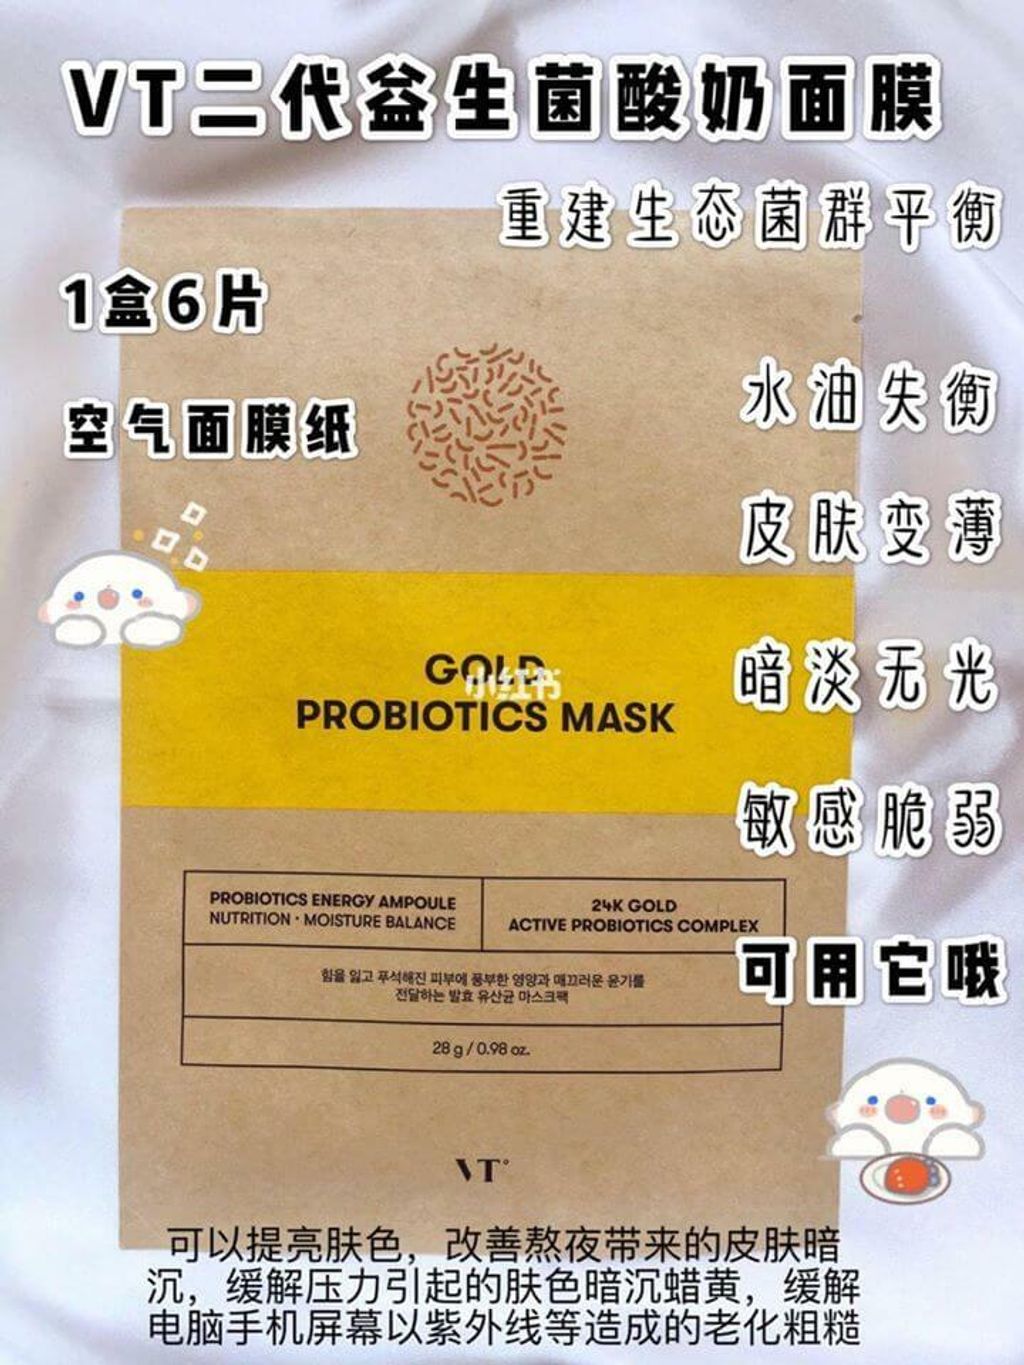 JuzBeauty_JuzBeautyMalaysia_JuzPretty_Authentic_Kbeauty_Malaysia_Skin_Care_Cosmetics_Jbeauty_Australia_Health_Care_VT_Gold_Probiotics_Mask_ (2).jpg